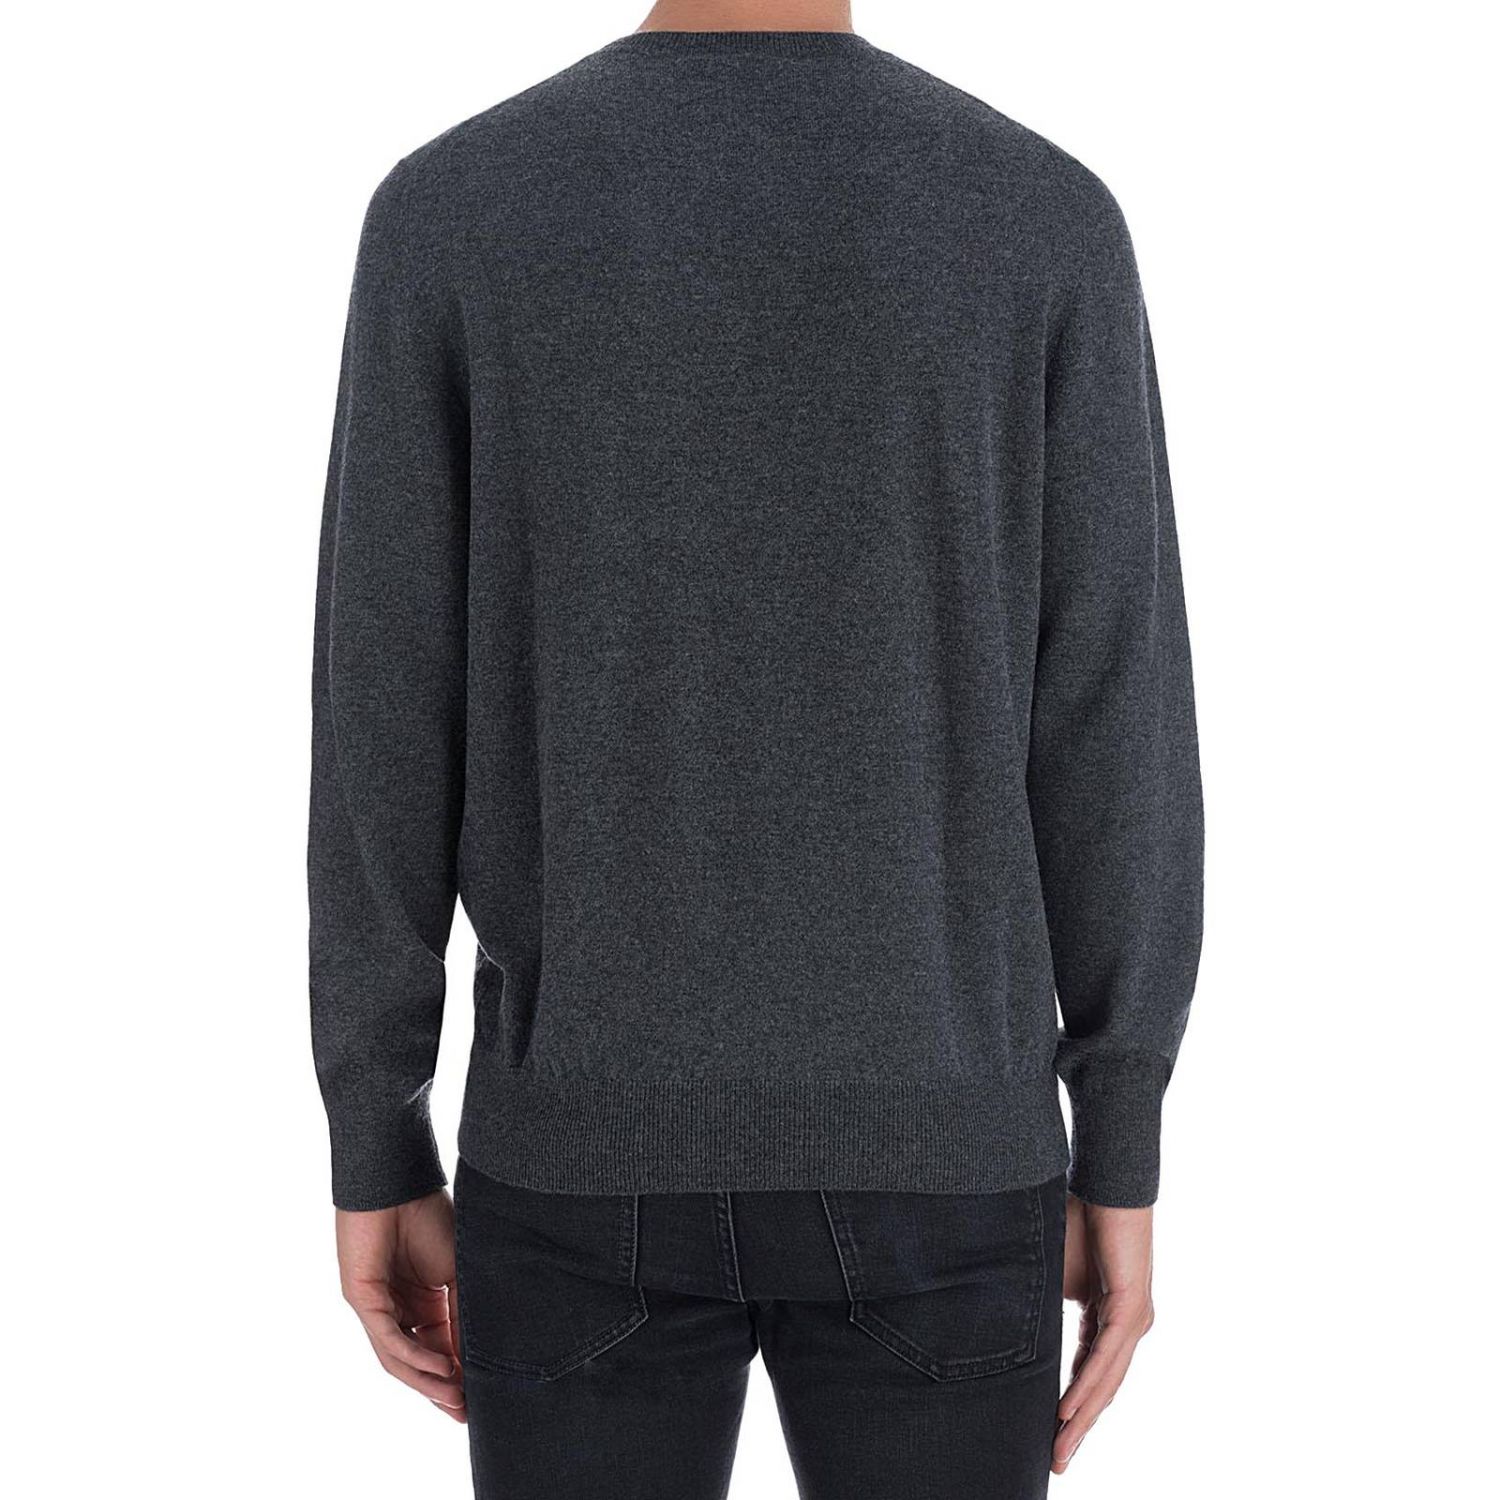 Mcq Outlet: Sweater men ueen | Sweater Mcq Men Grey | Sweater Mcq ...